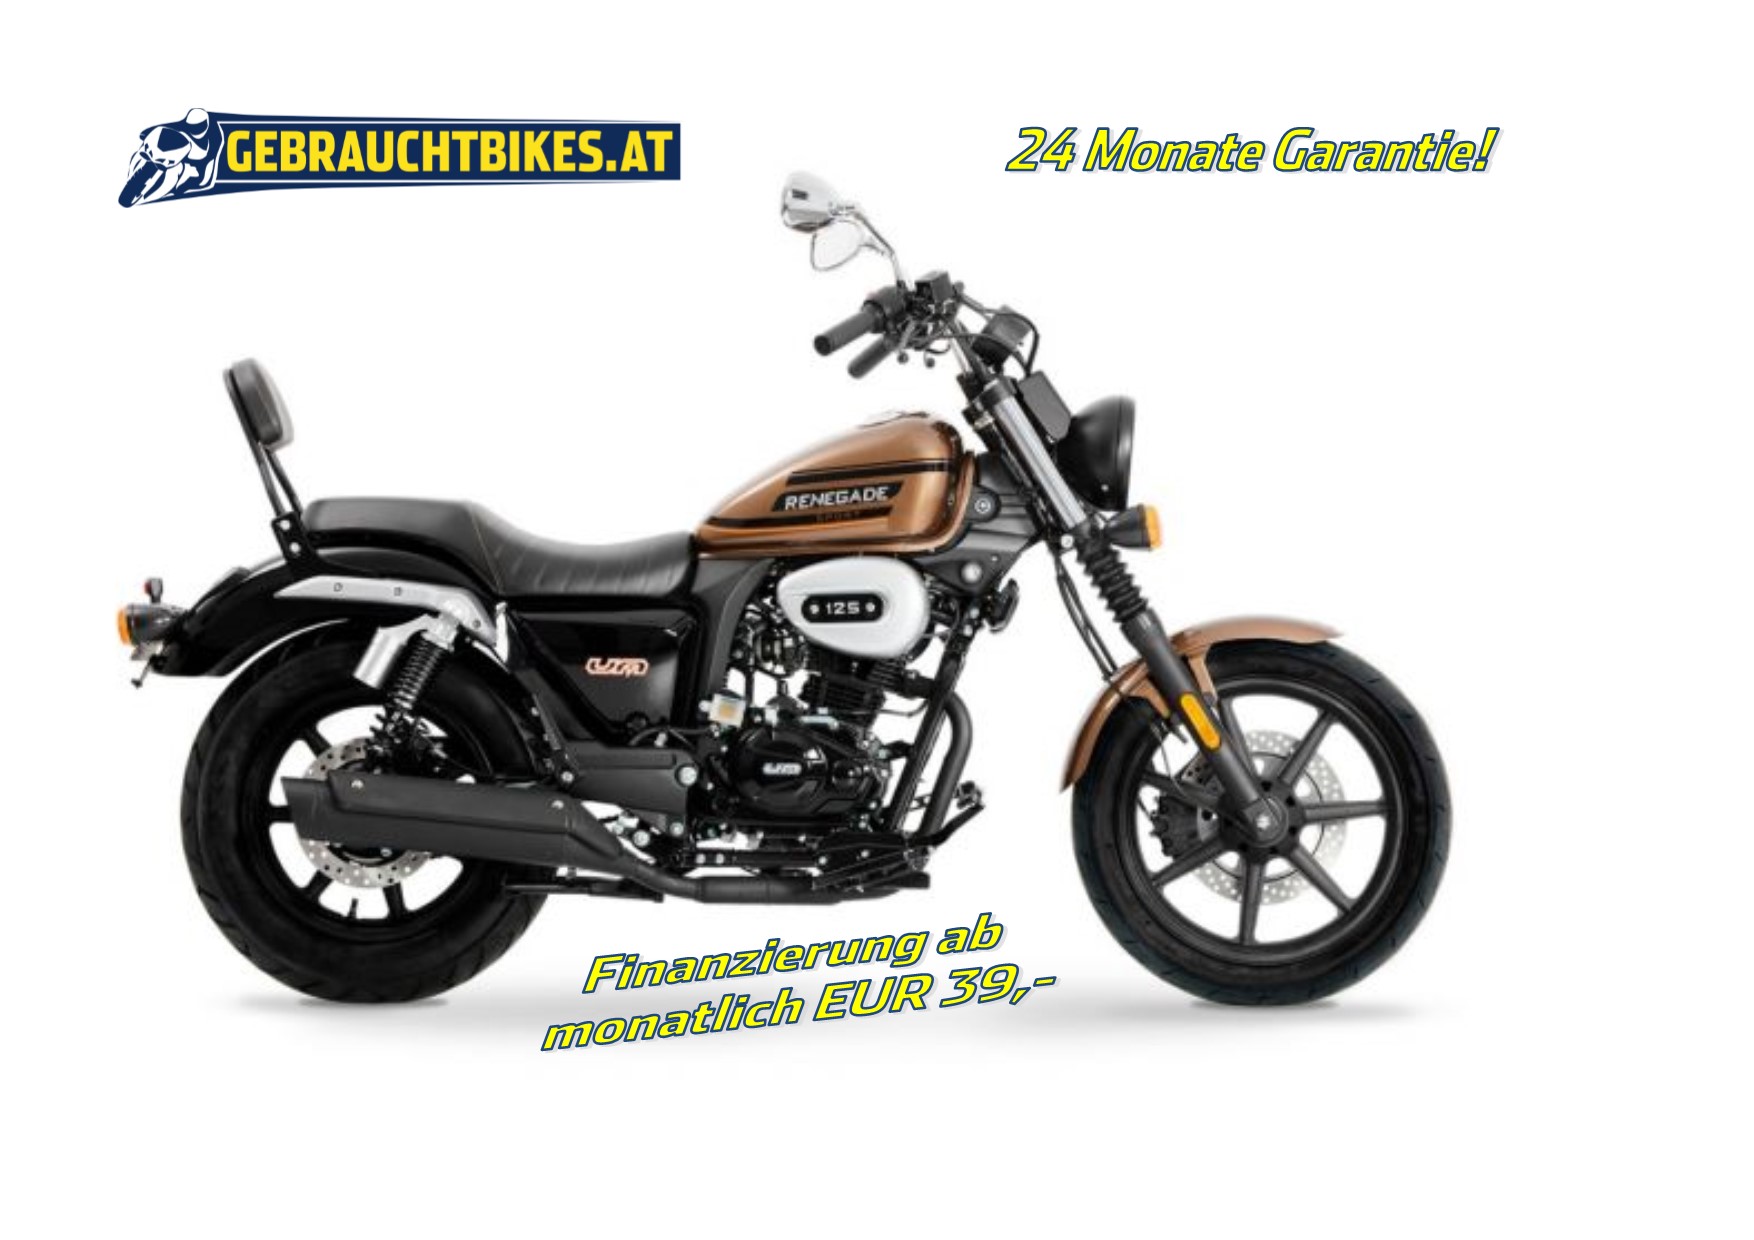 UM (United Motorcycles) Renegade Sport 125 - € 2749